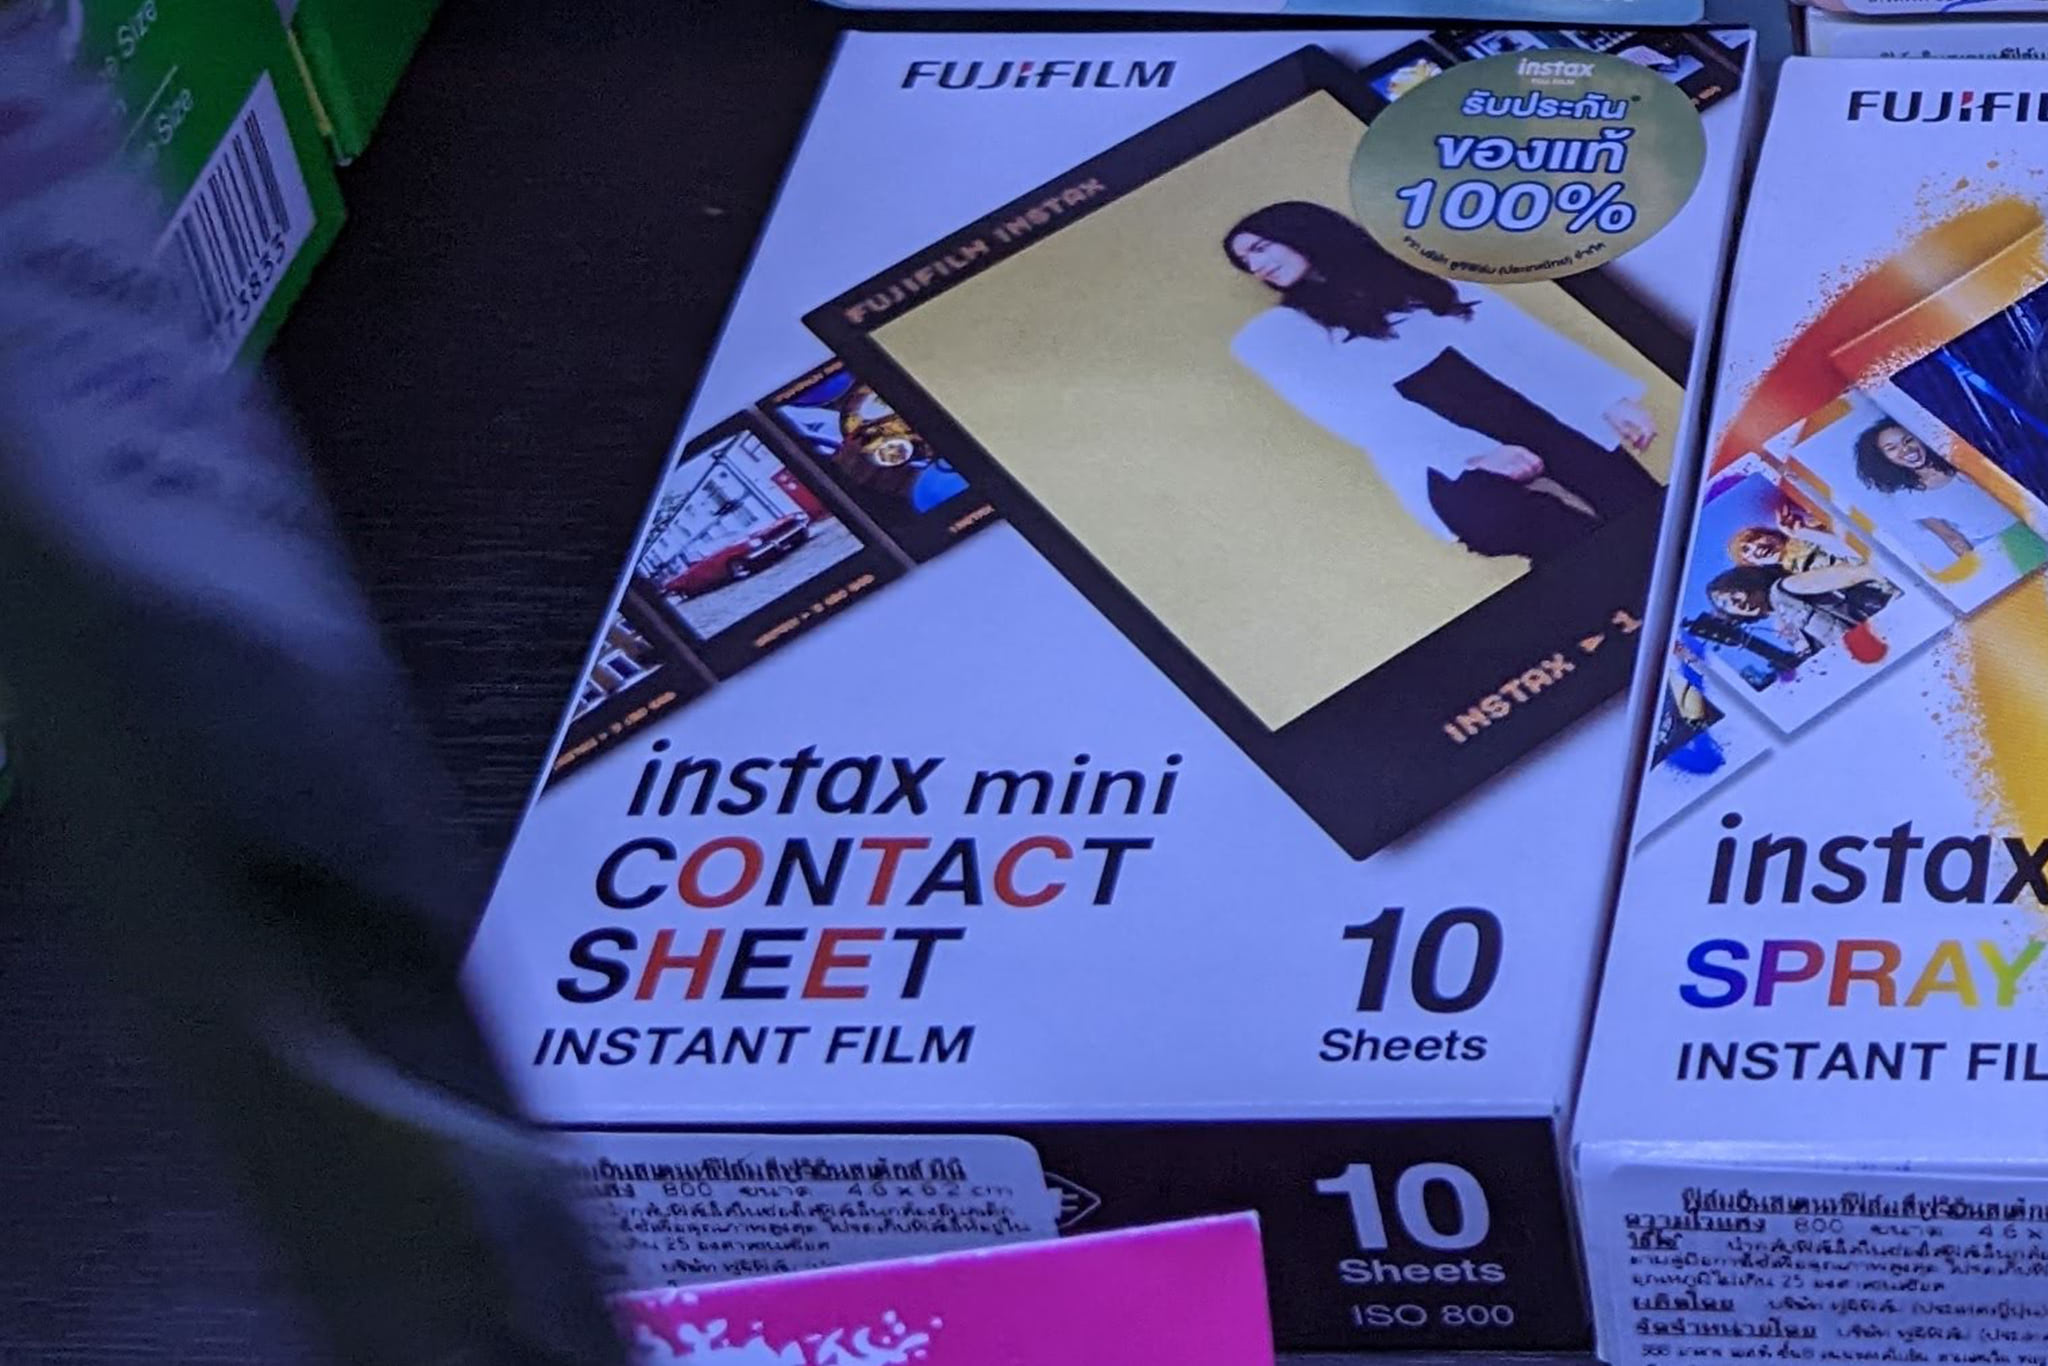 FUJIFILM Instax Mini Film 10s (10 Sheets) Single Pack